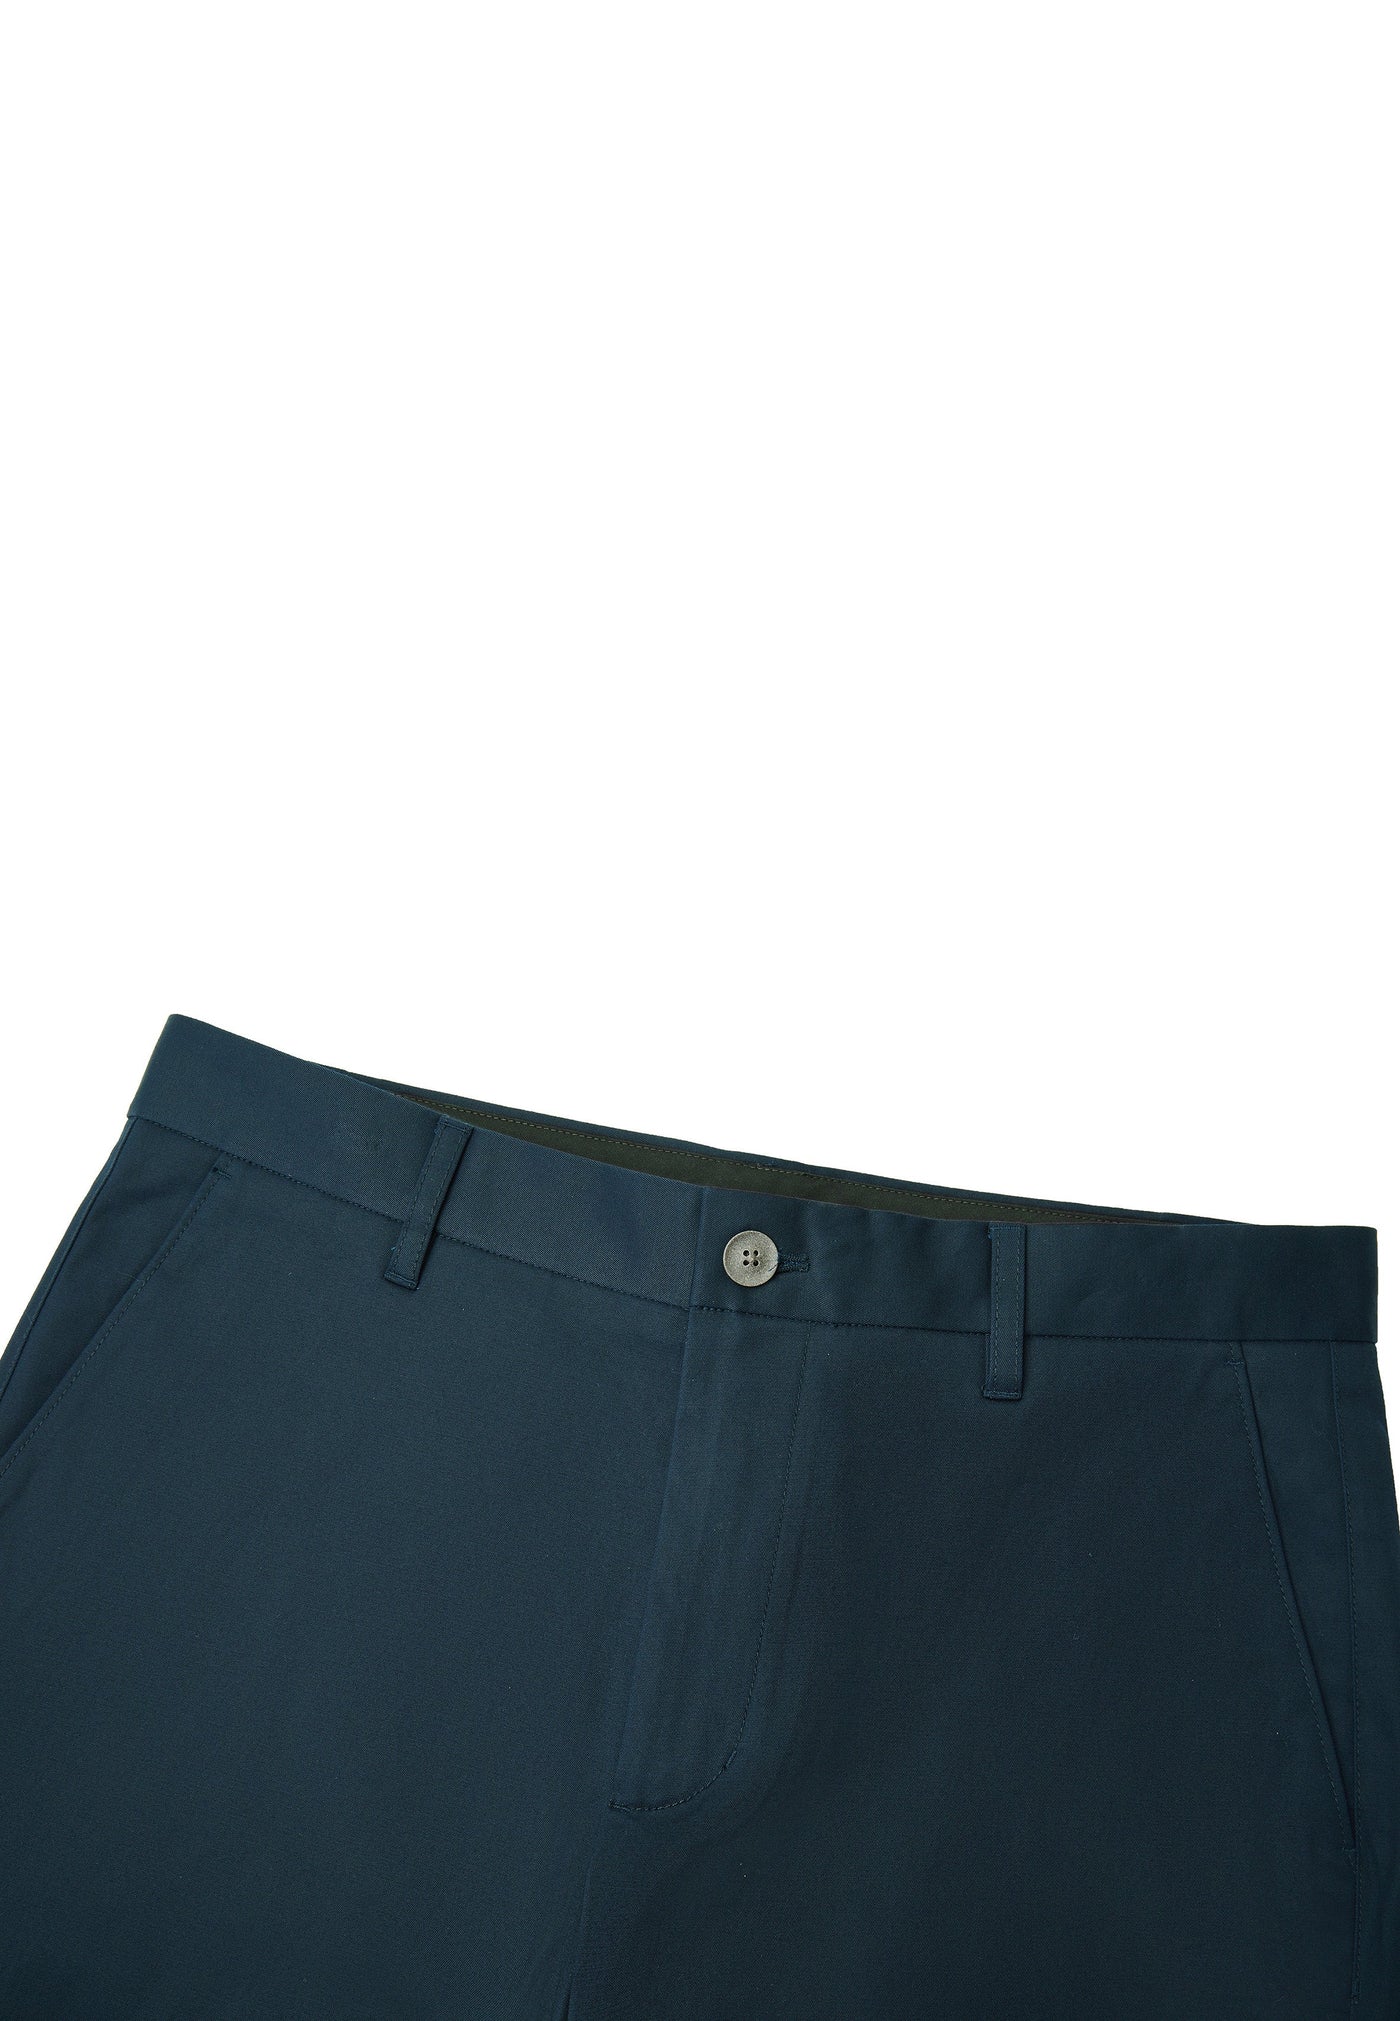 Men Clothing Machine Washable Informal Pants Slim Tapered Fit